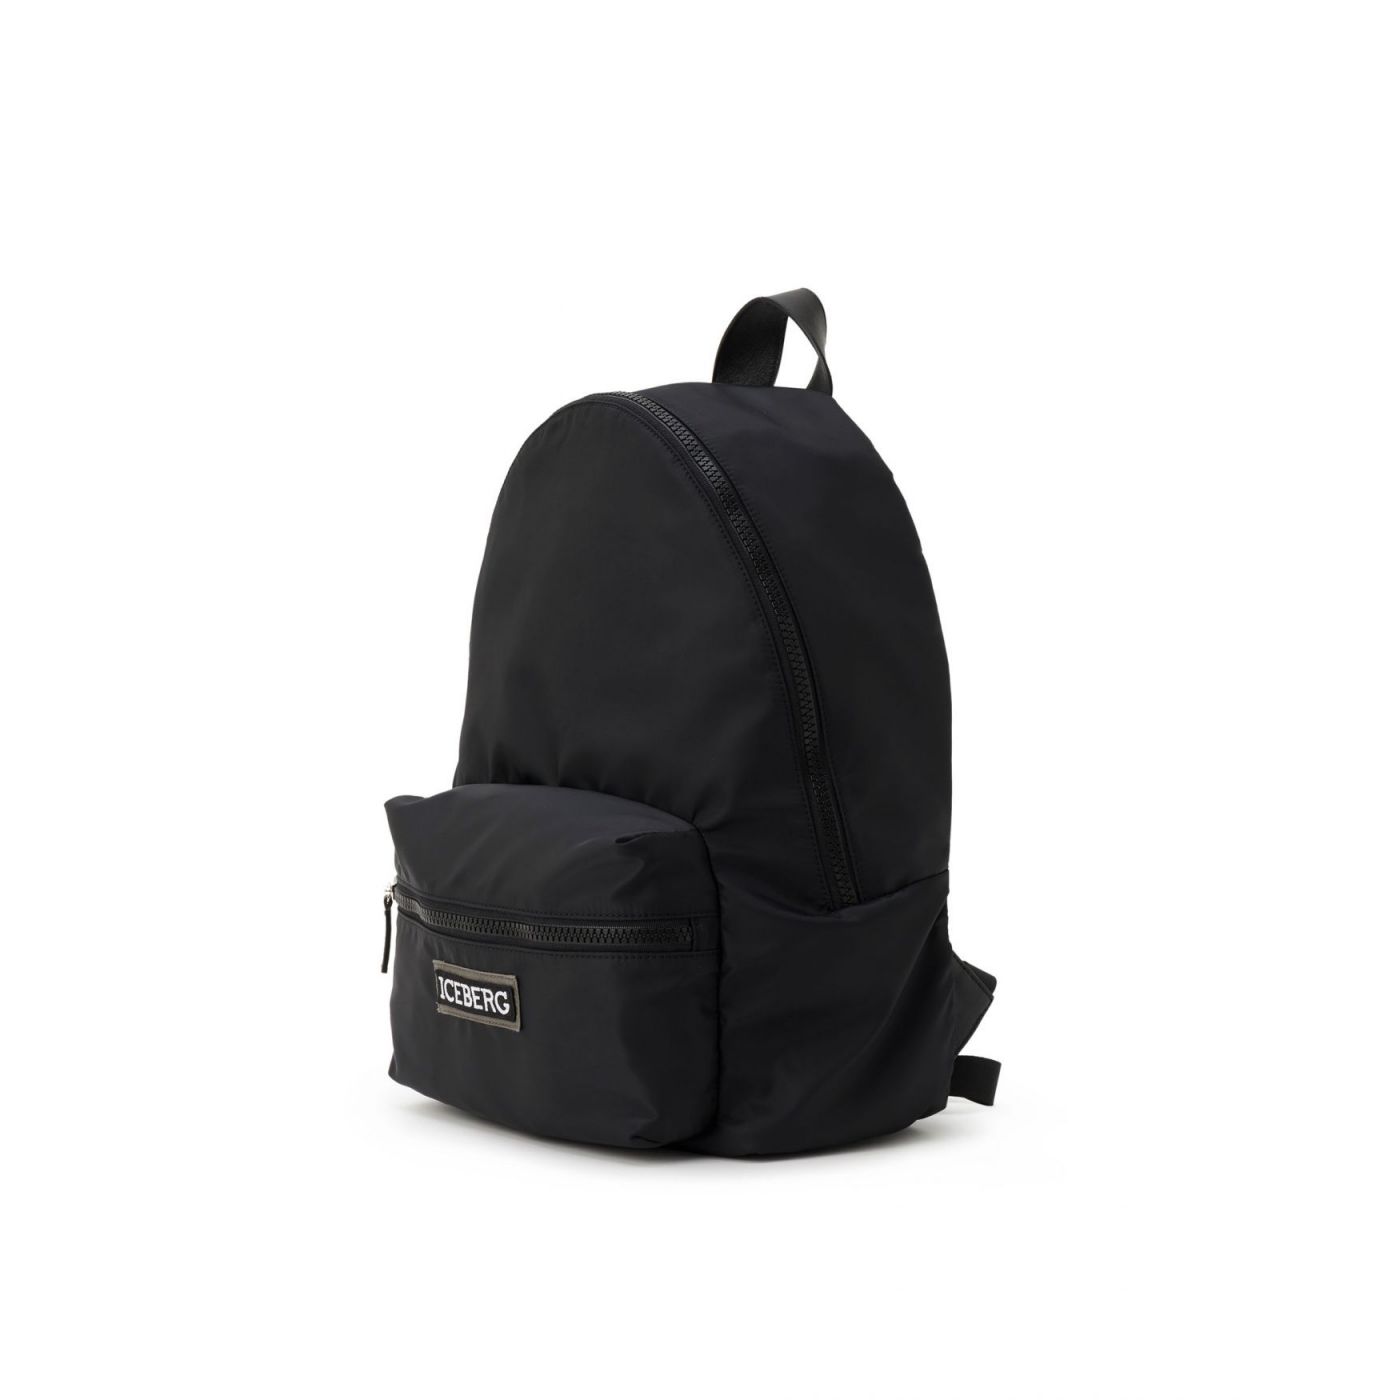 » ICEBERG black backpack with logo on back and straps